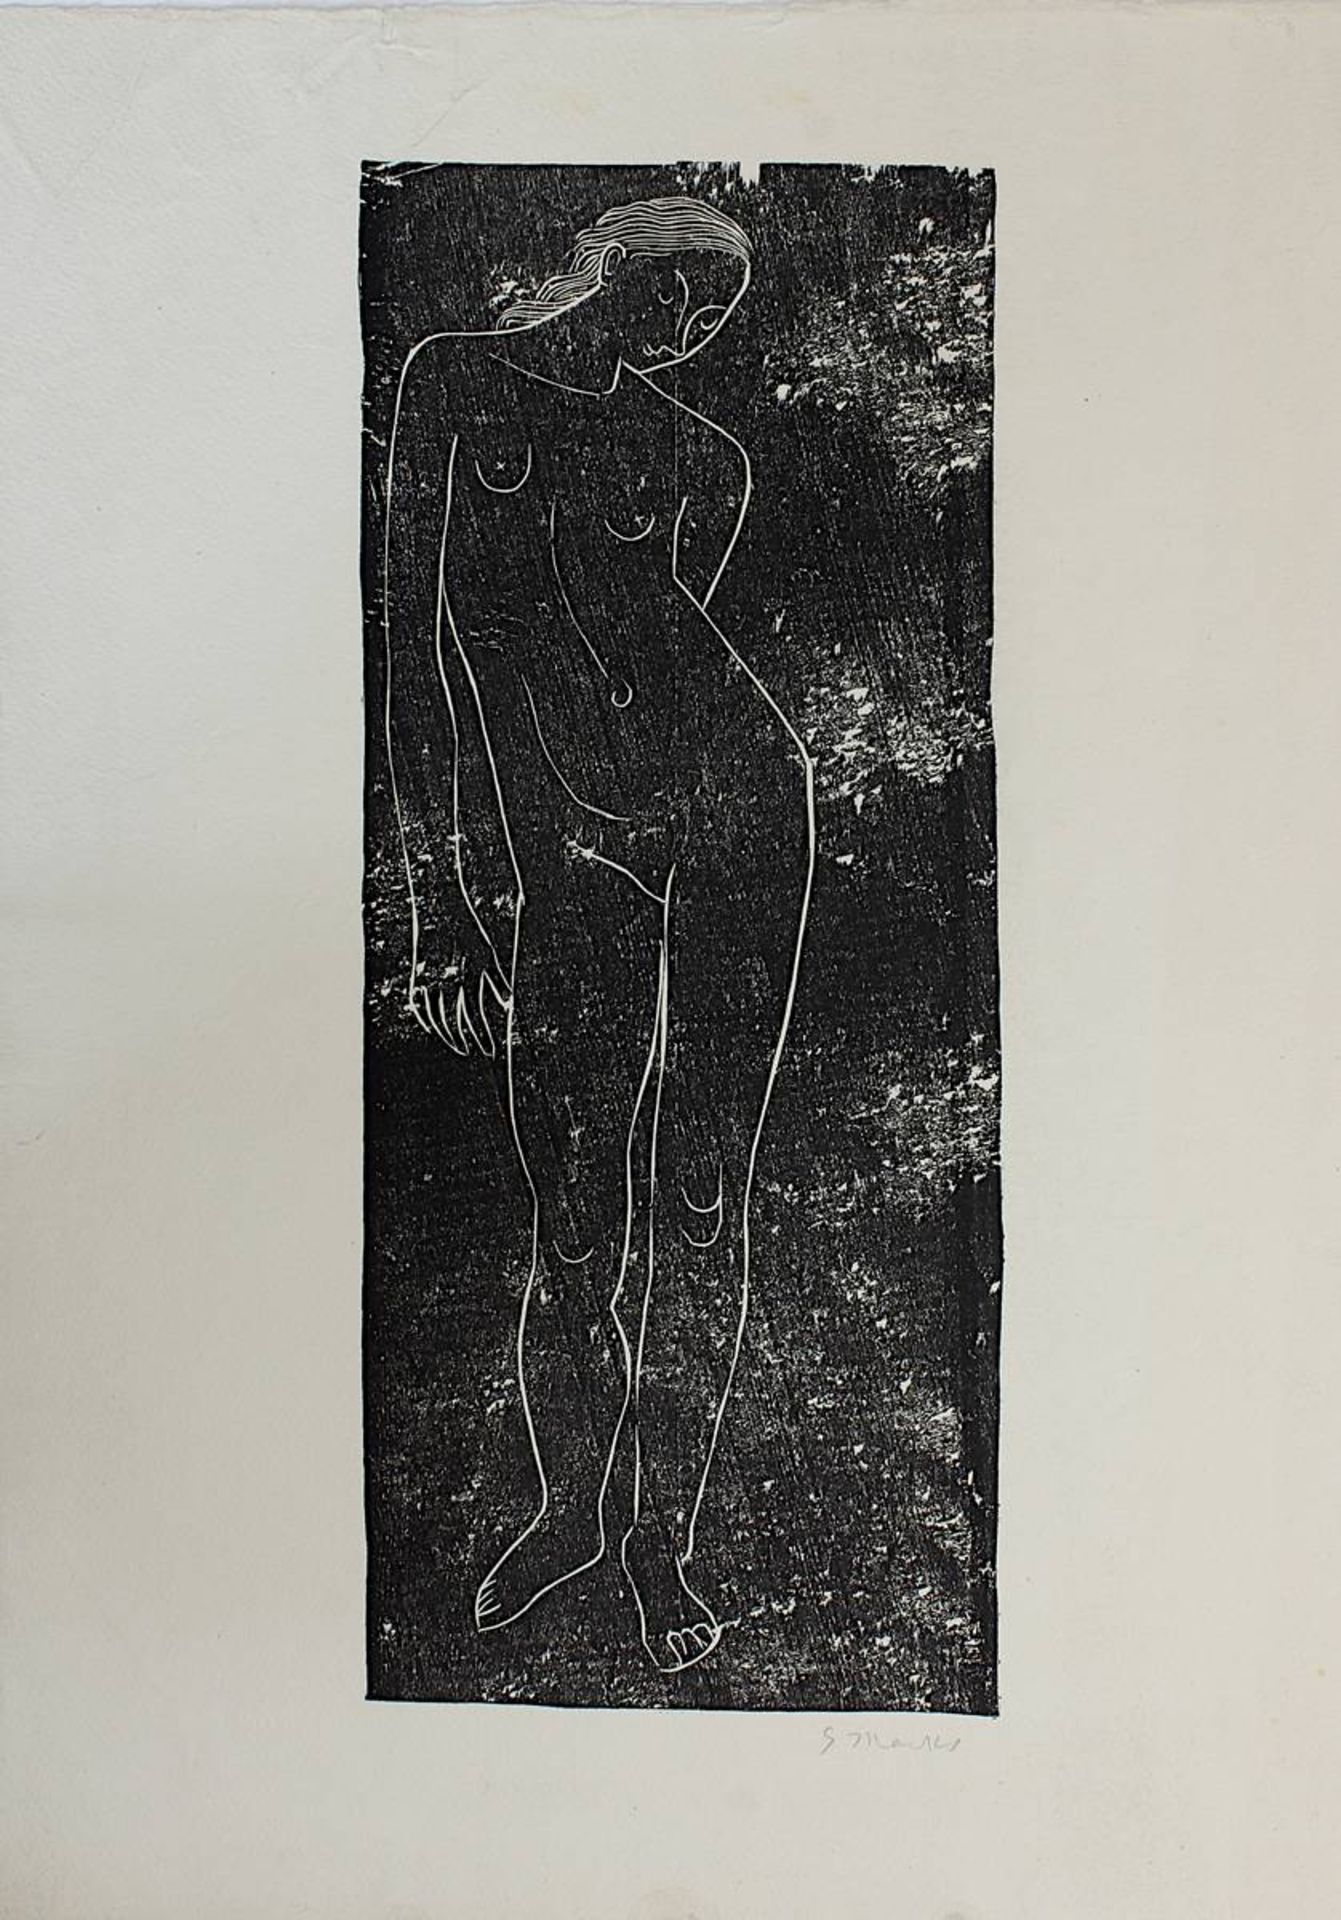 Marcks, Gerhard (Berlin 1889 - 1981 Burgbrohl), "Jungfrau", Holzschnitt um 1947/48, unt. der